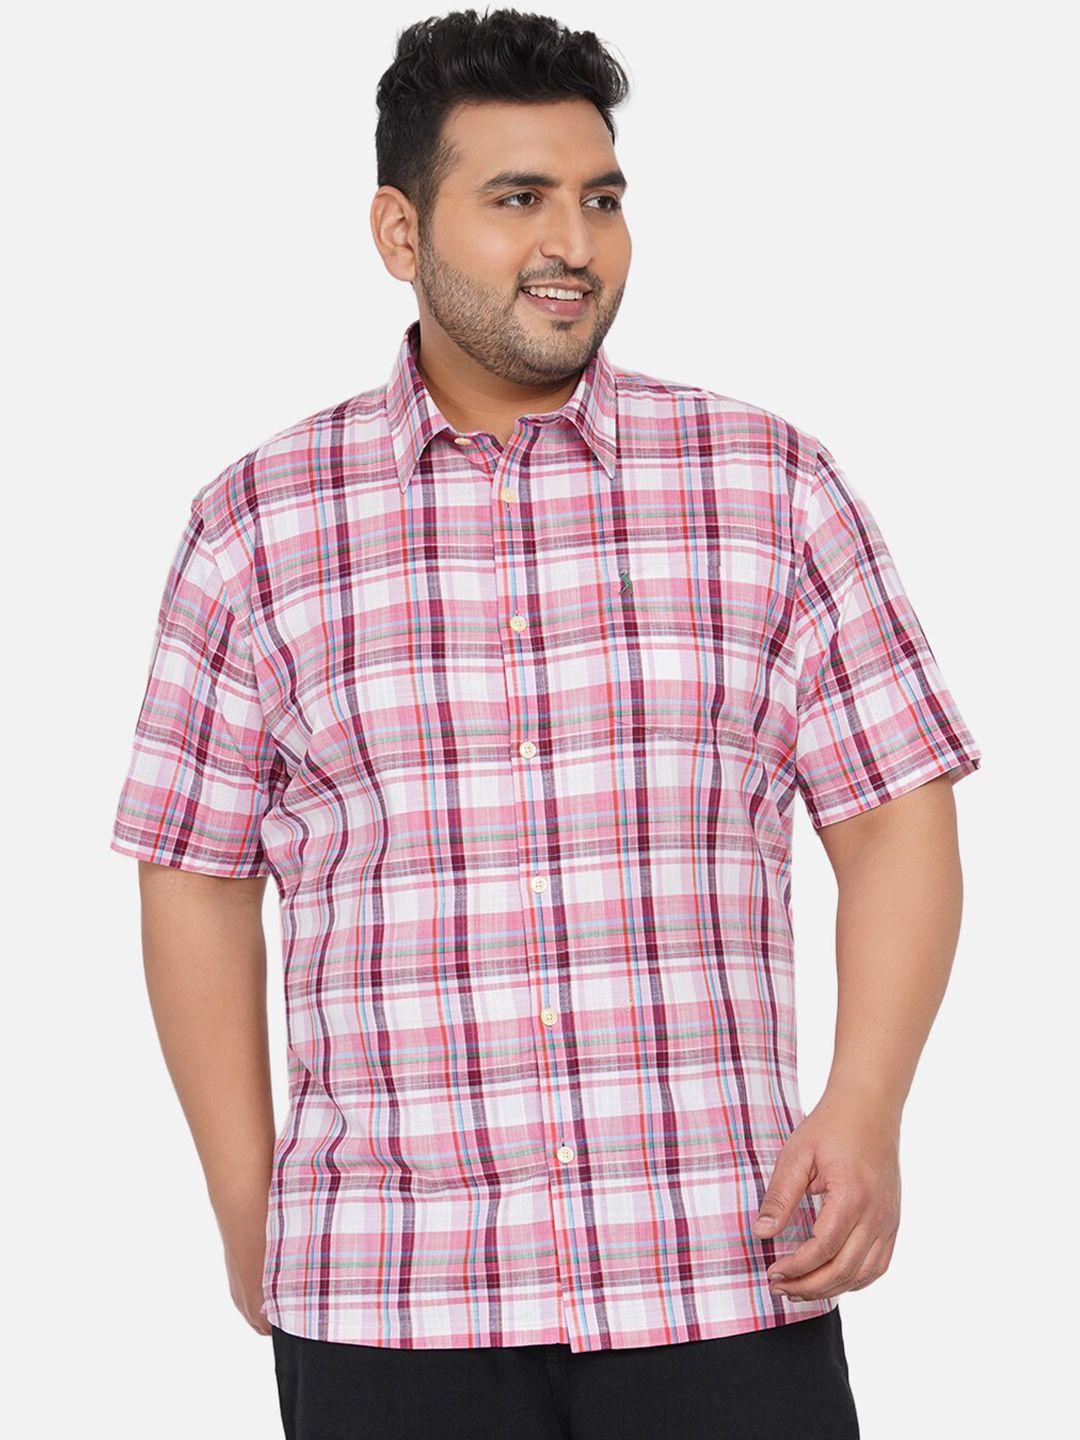 santonio men plus size pink & white comfort checked pure cotton casual shirt